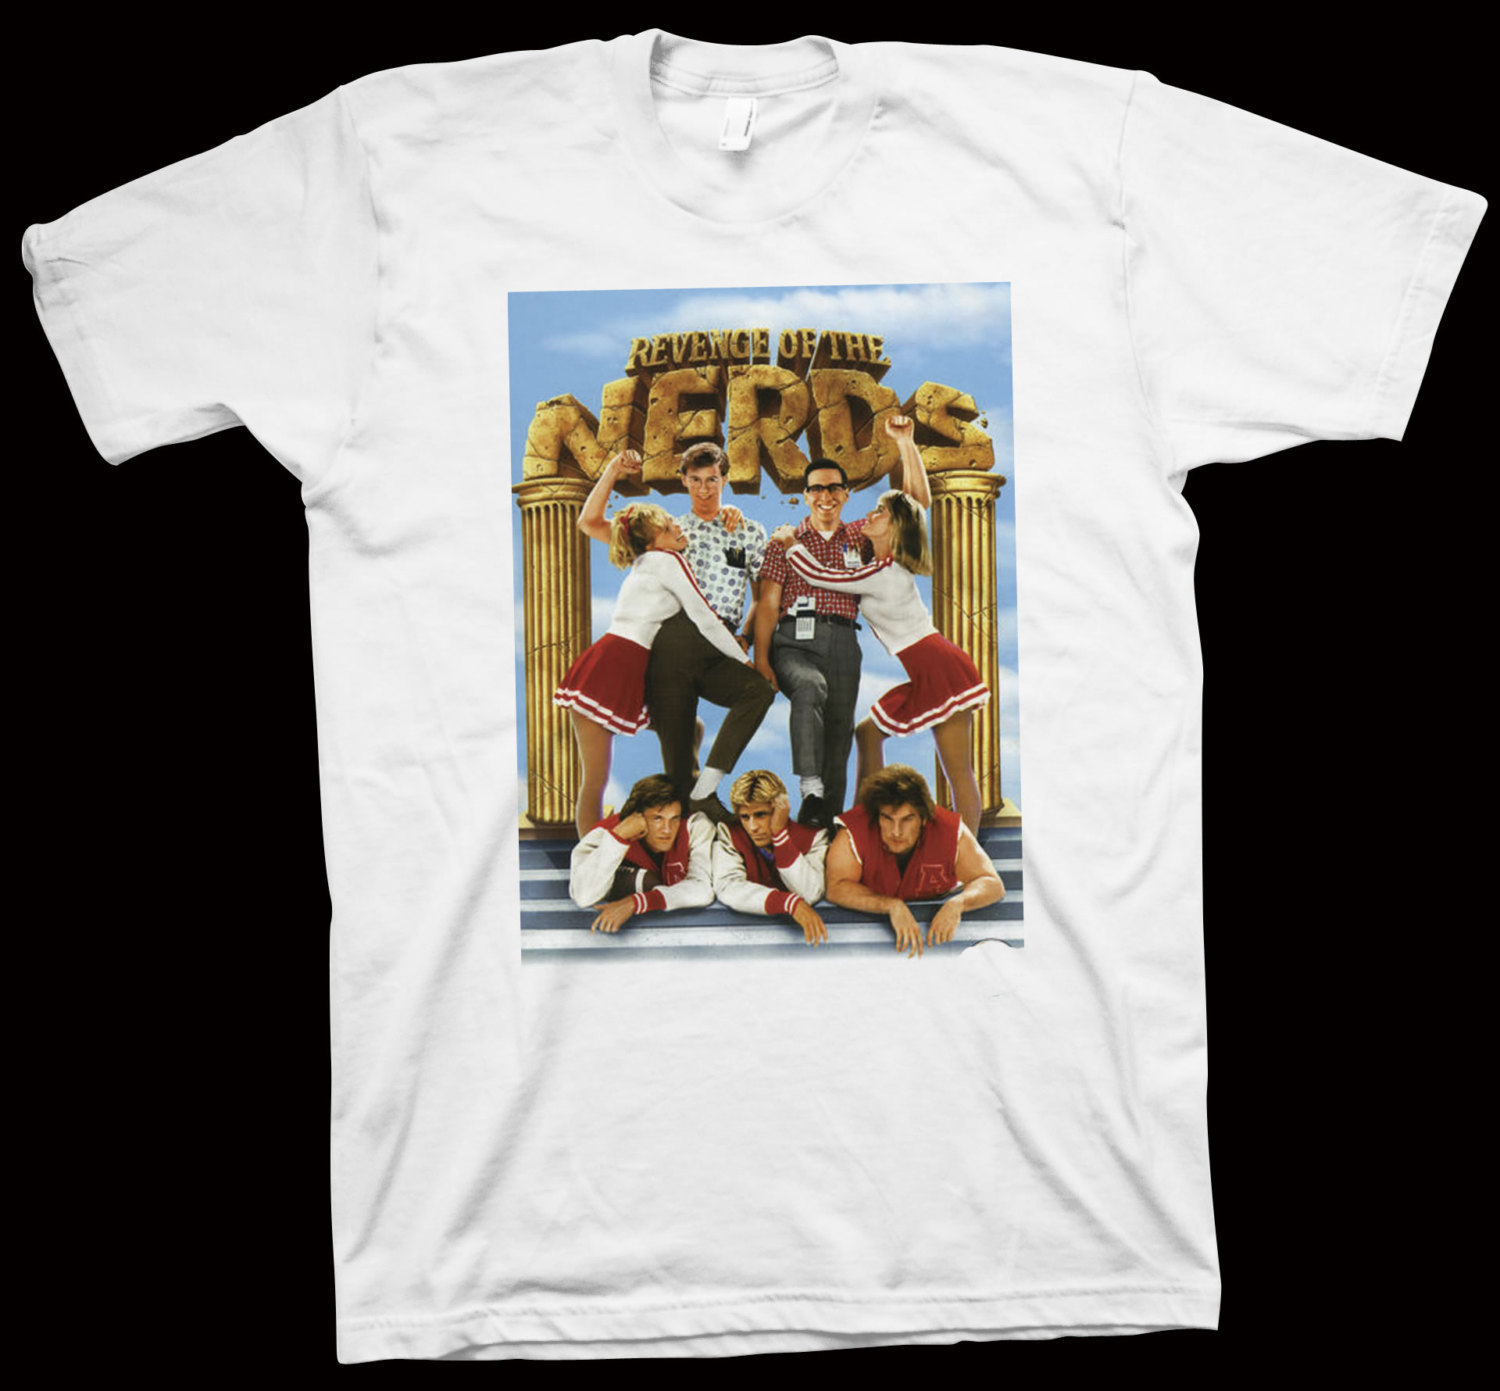 Primary image for Revenge of the Nerds T-Shirt Jeff Kanew, Robert Carradine, Anthony Edwards, Film